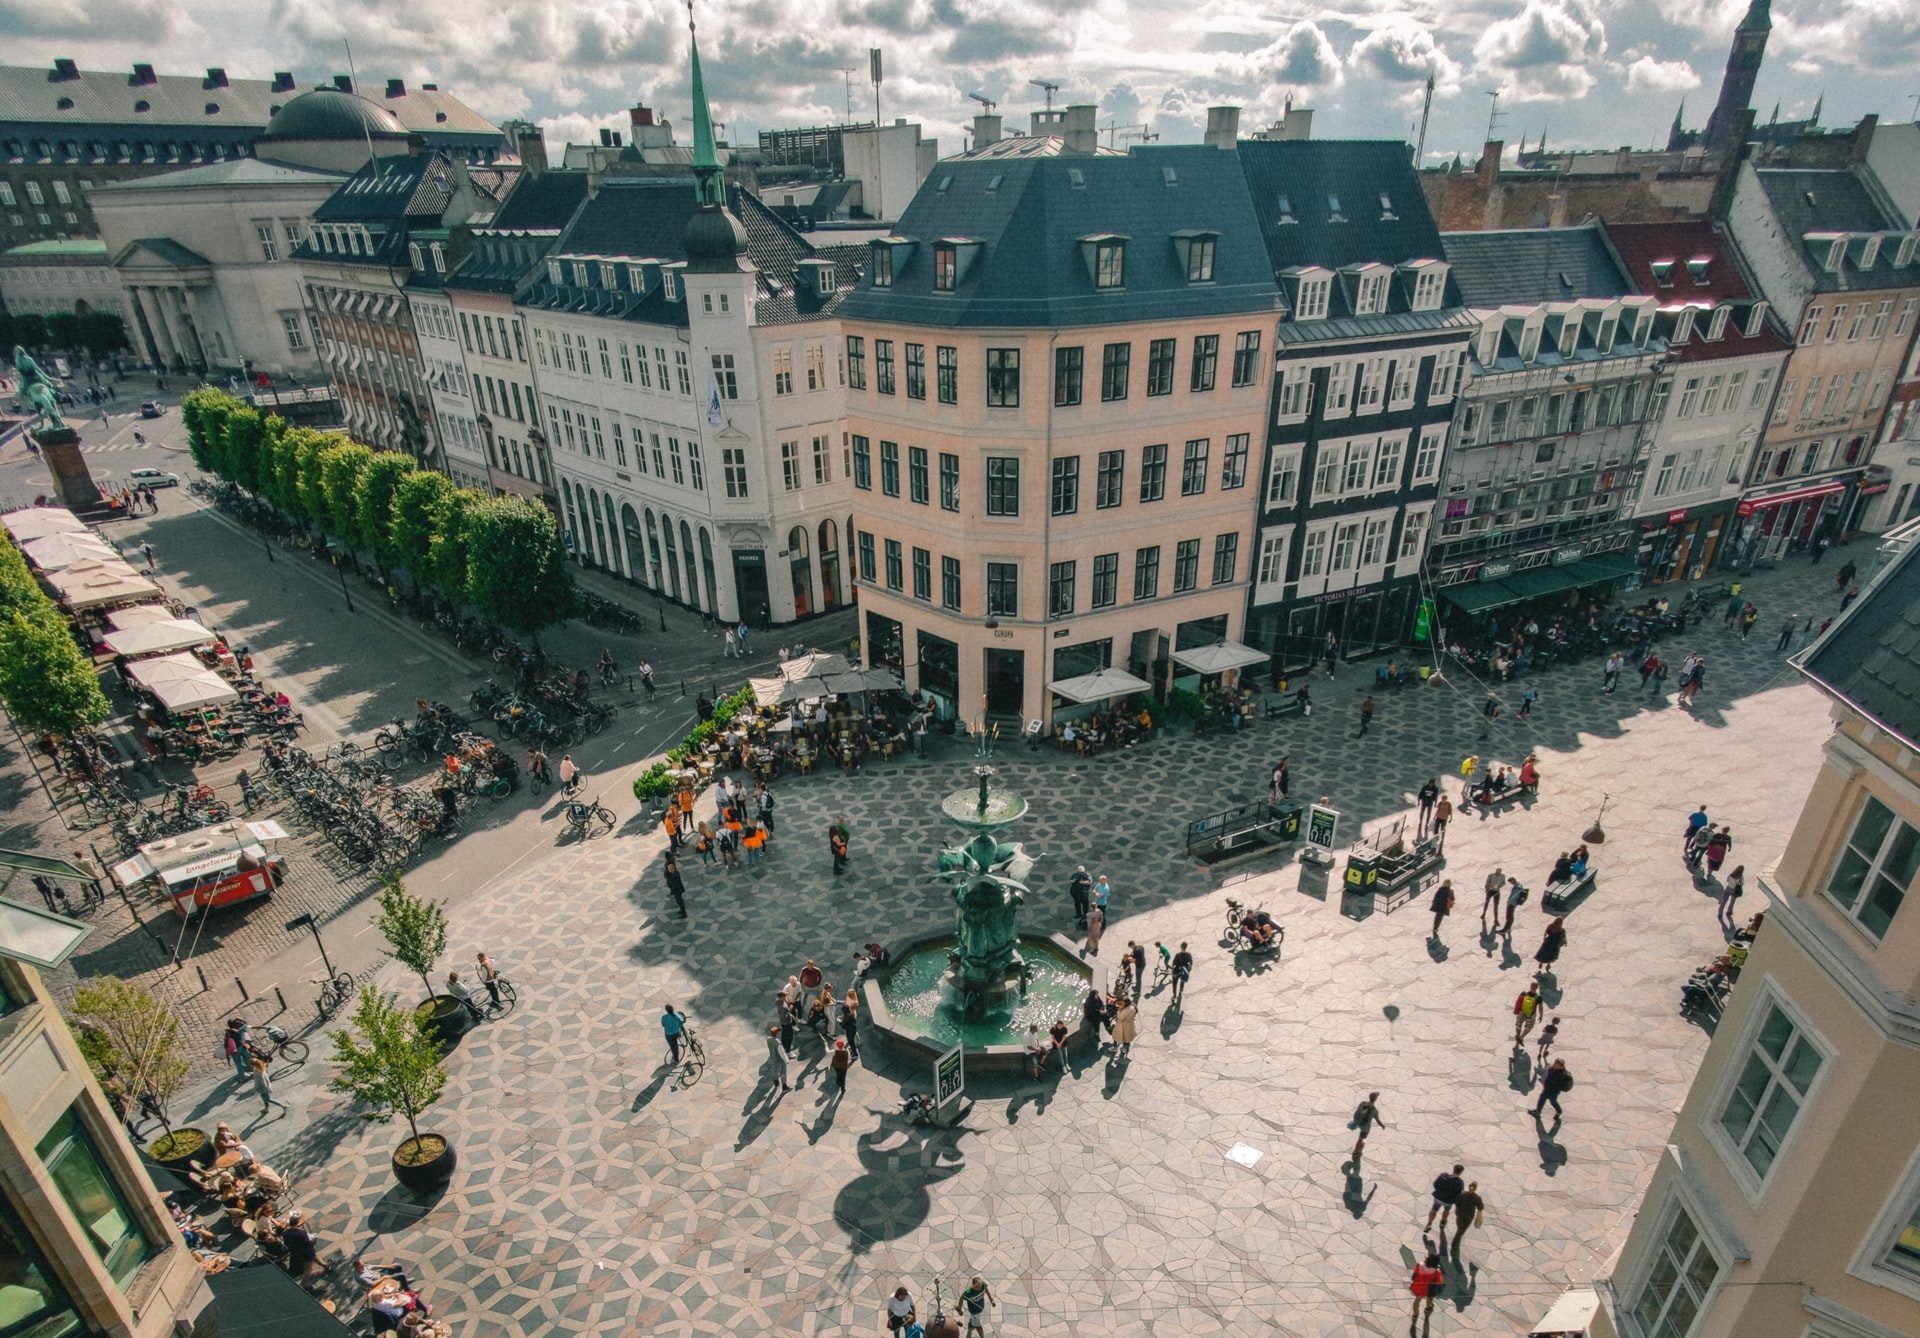 Town square in Copenhagen, Denmark from above